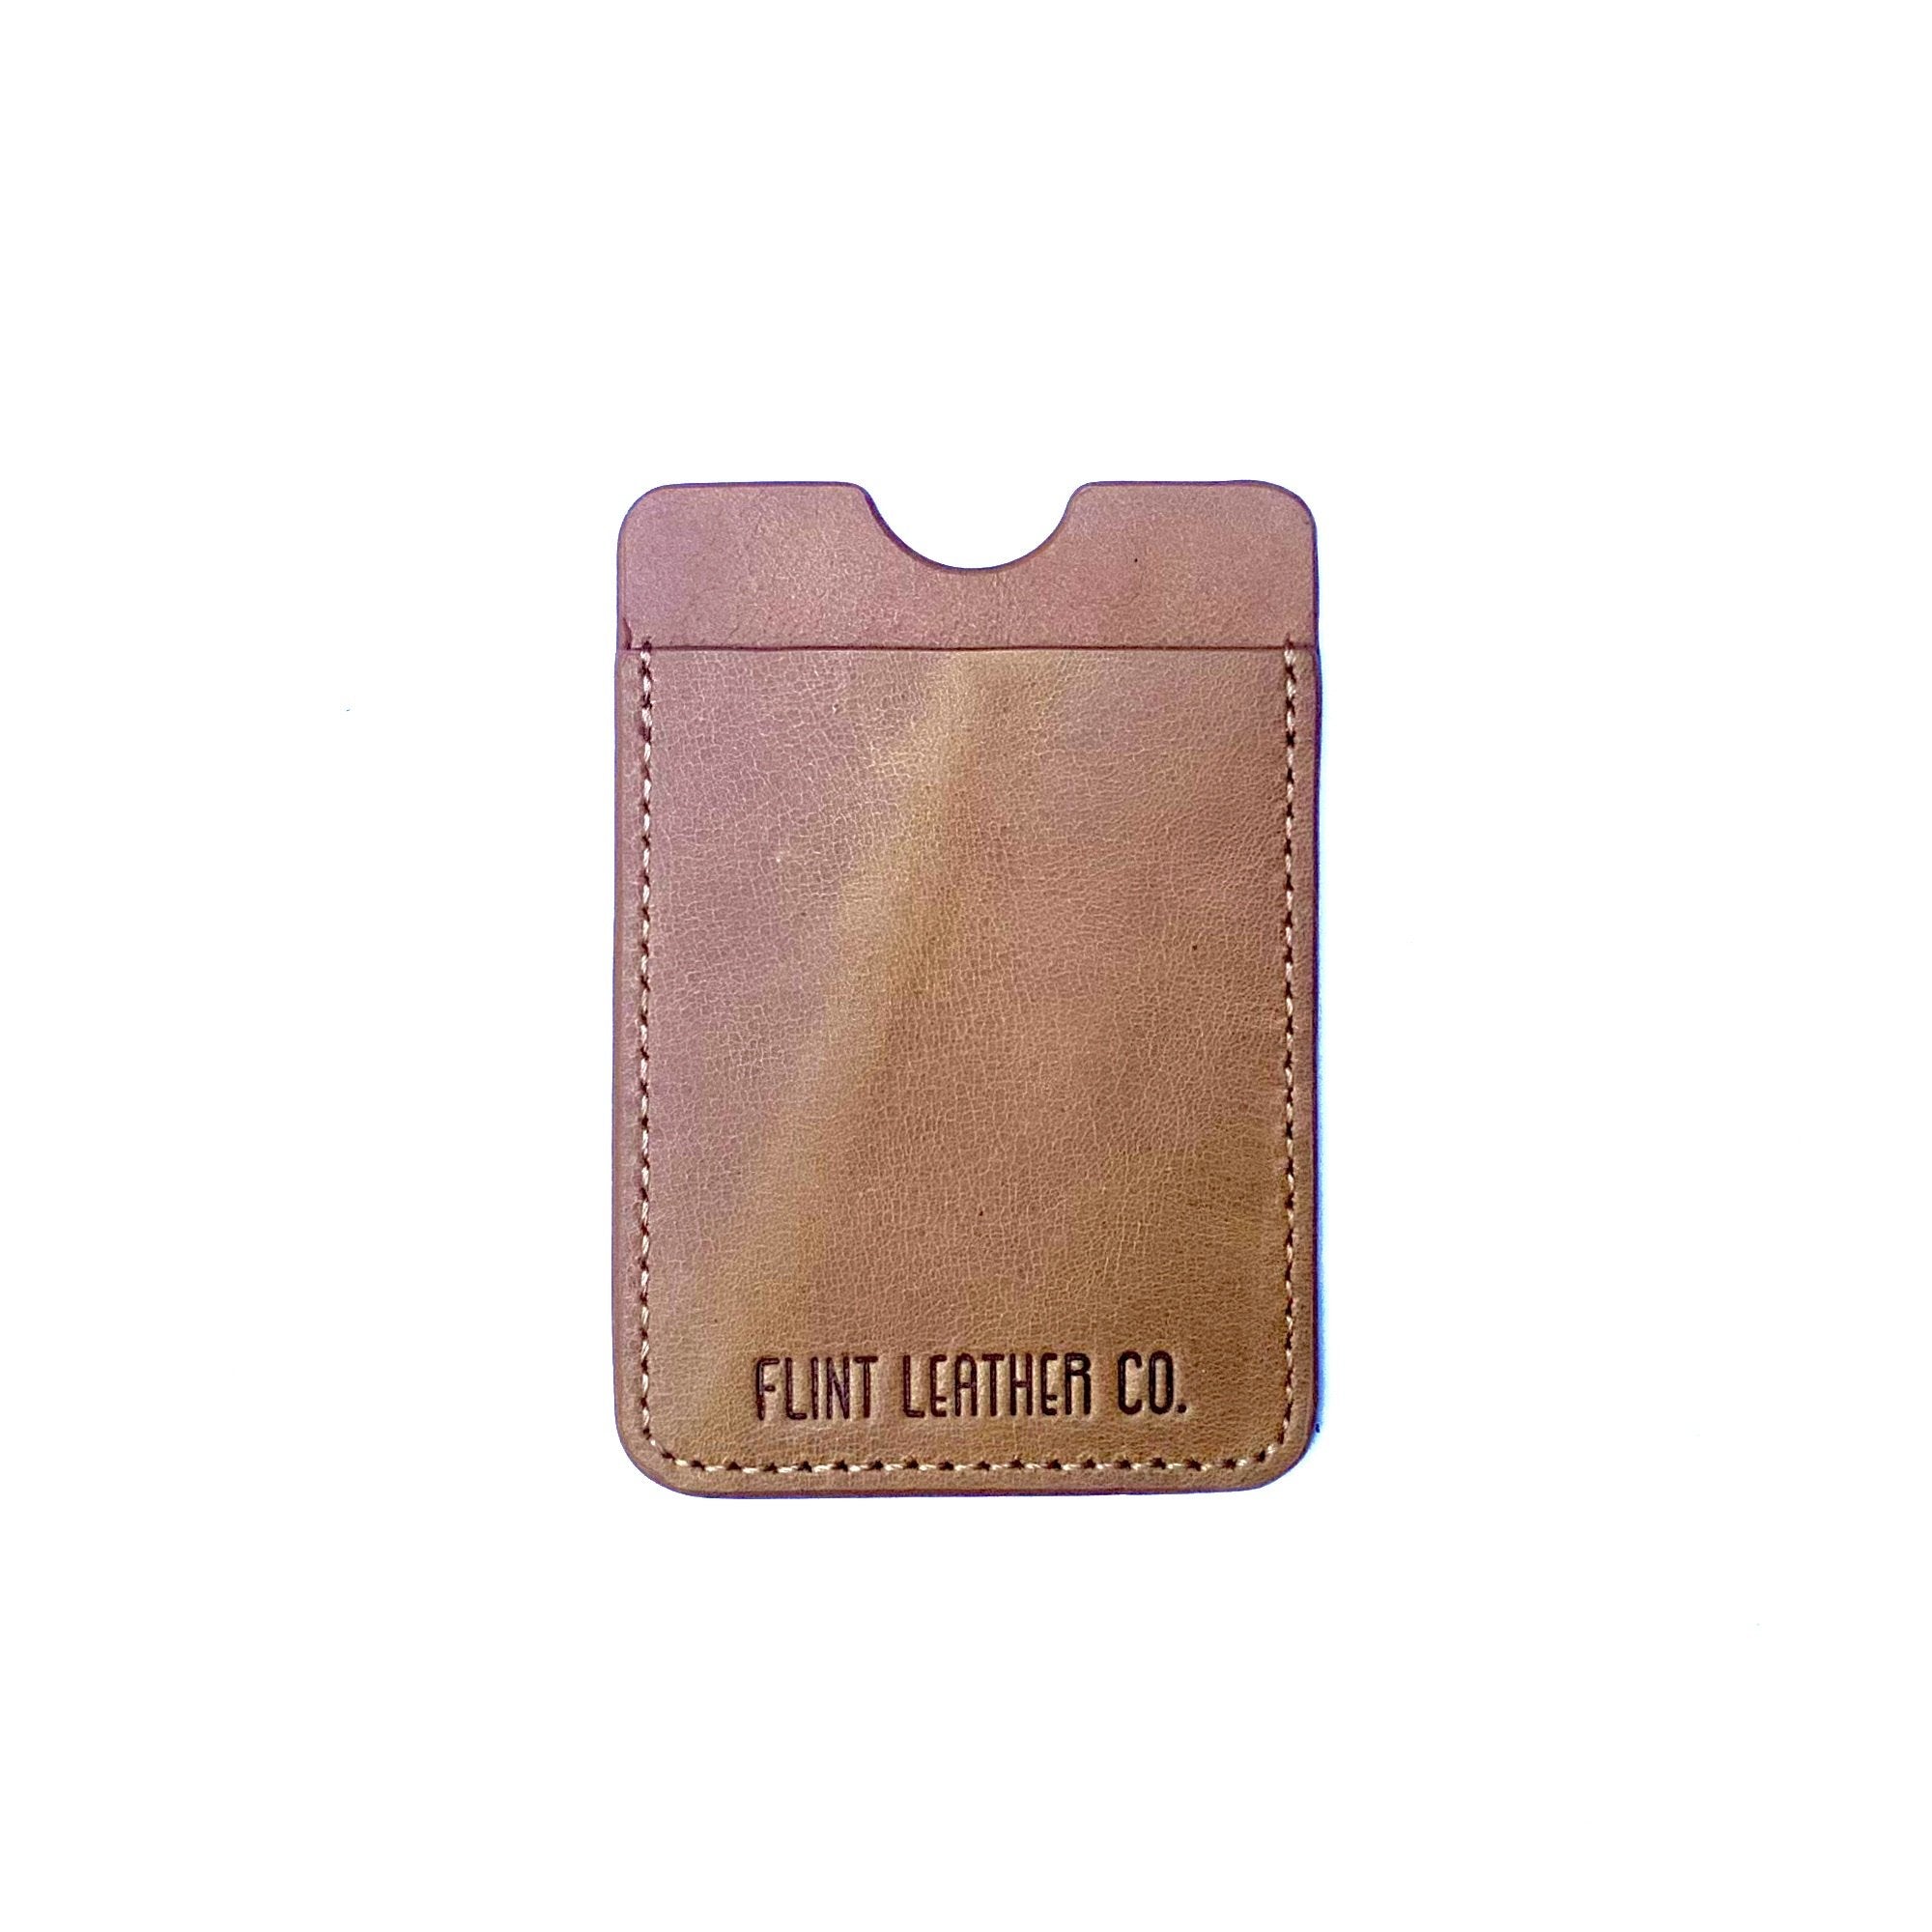 Flint Leather Co. Phone Wallet